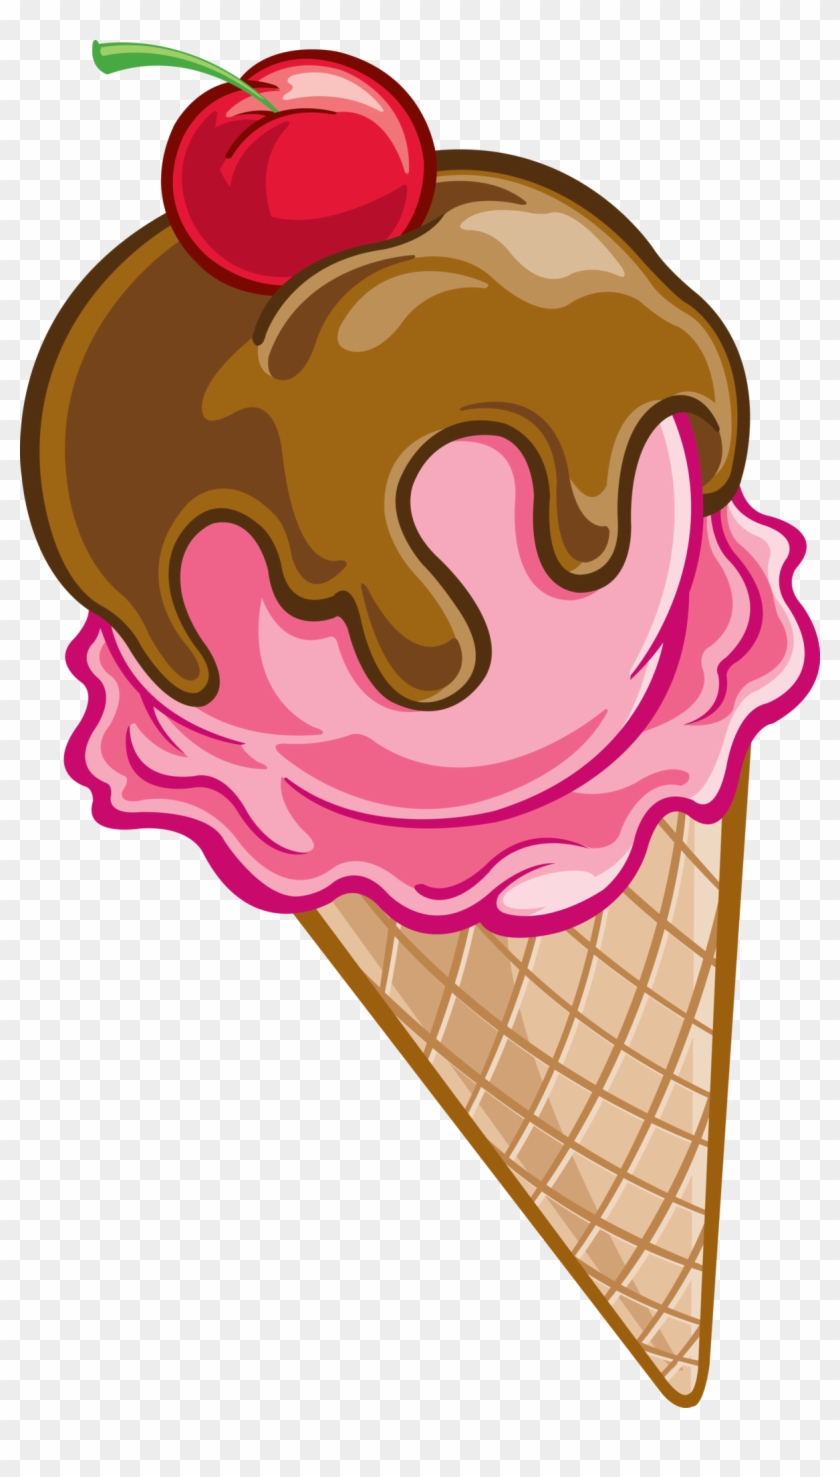 Sweet Ice Cream Kite For Kids - Kites And Ice Cream #1463327